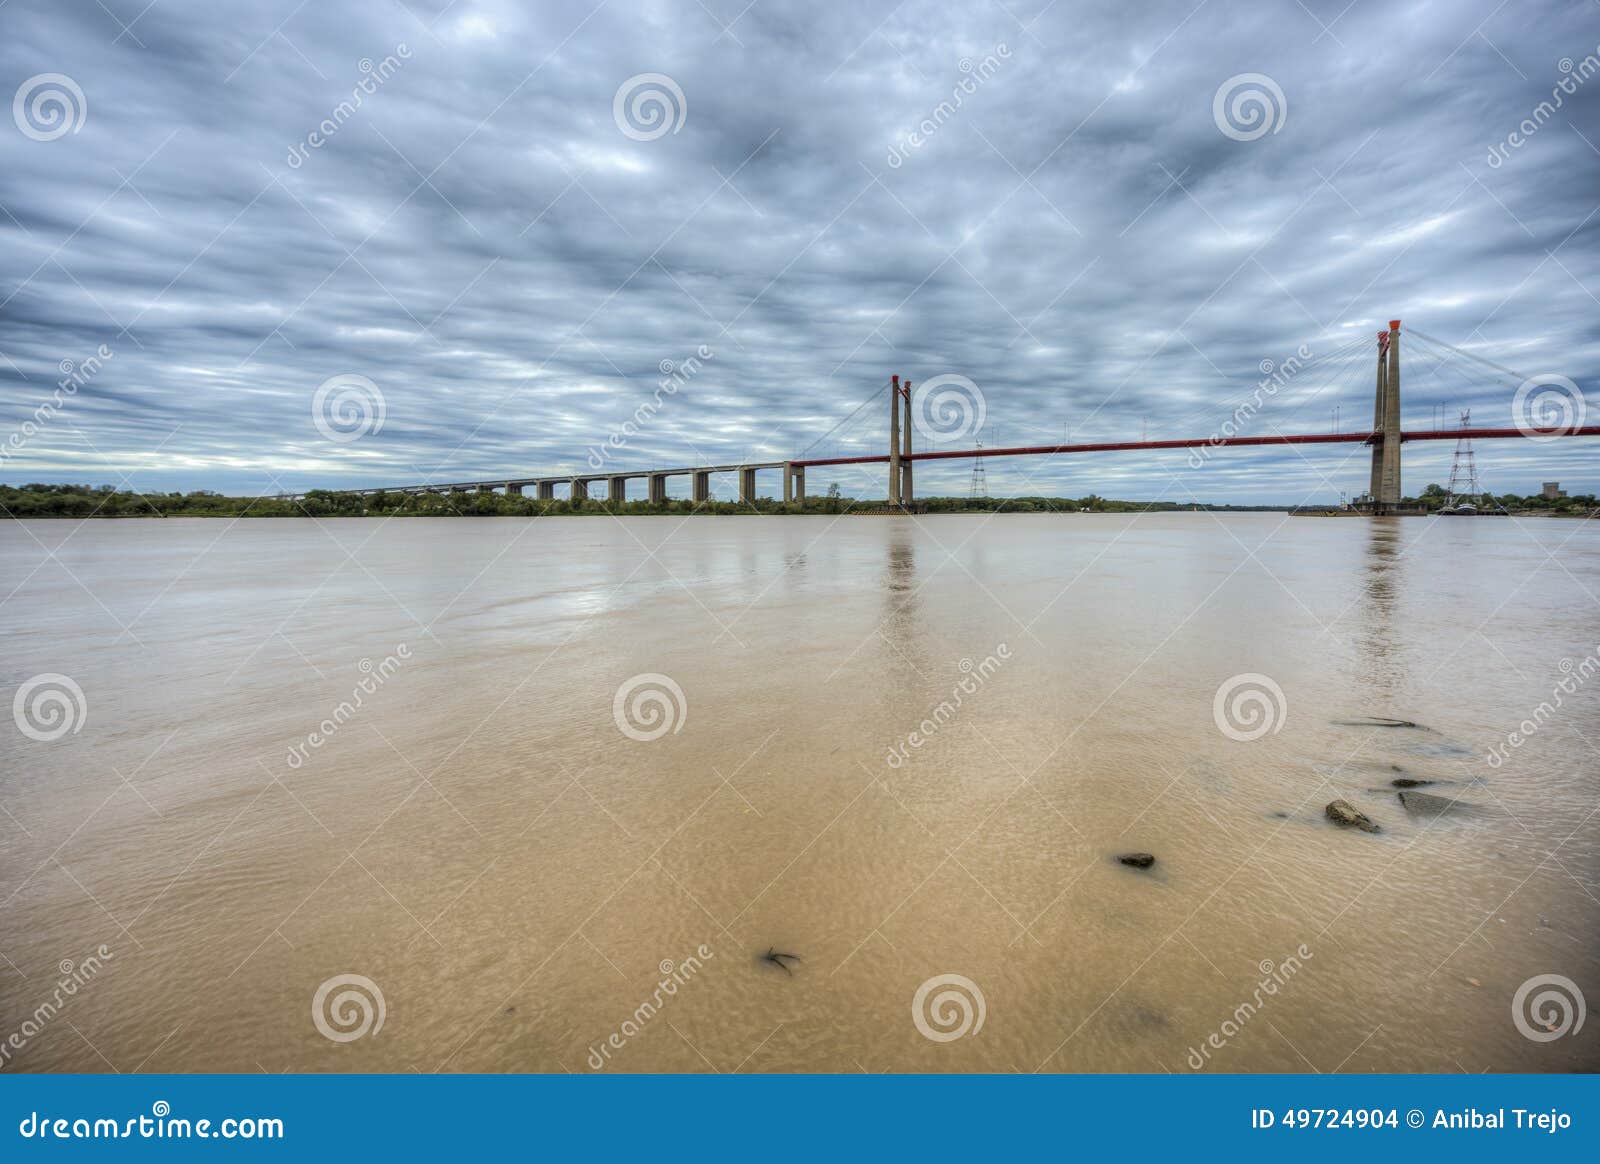 zarate brazo largo bridge, entre rios, argentina